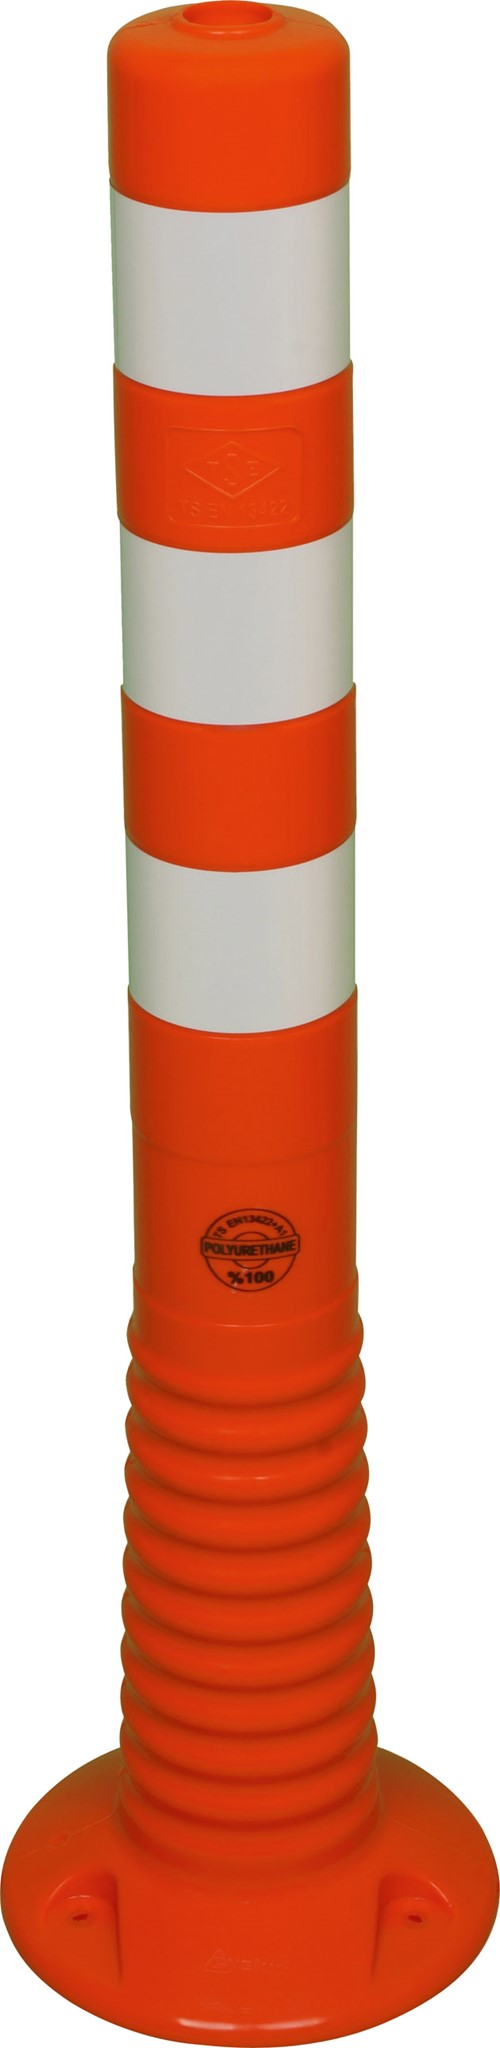 Image de Flexipfosten 750mm, Ø 80mm, orange